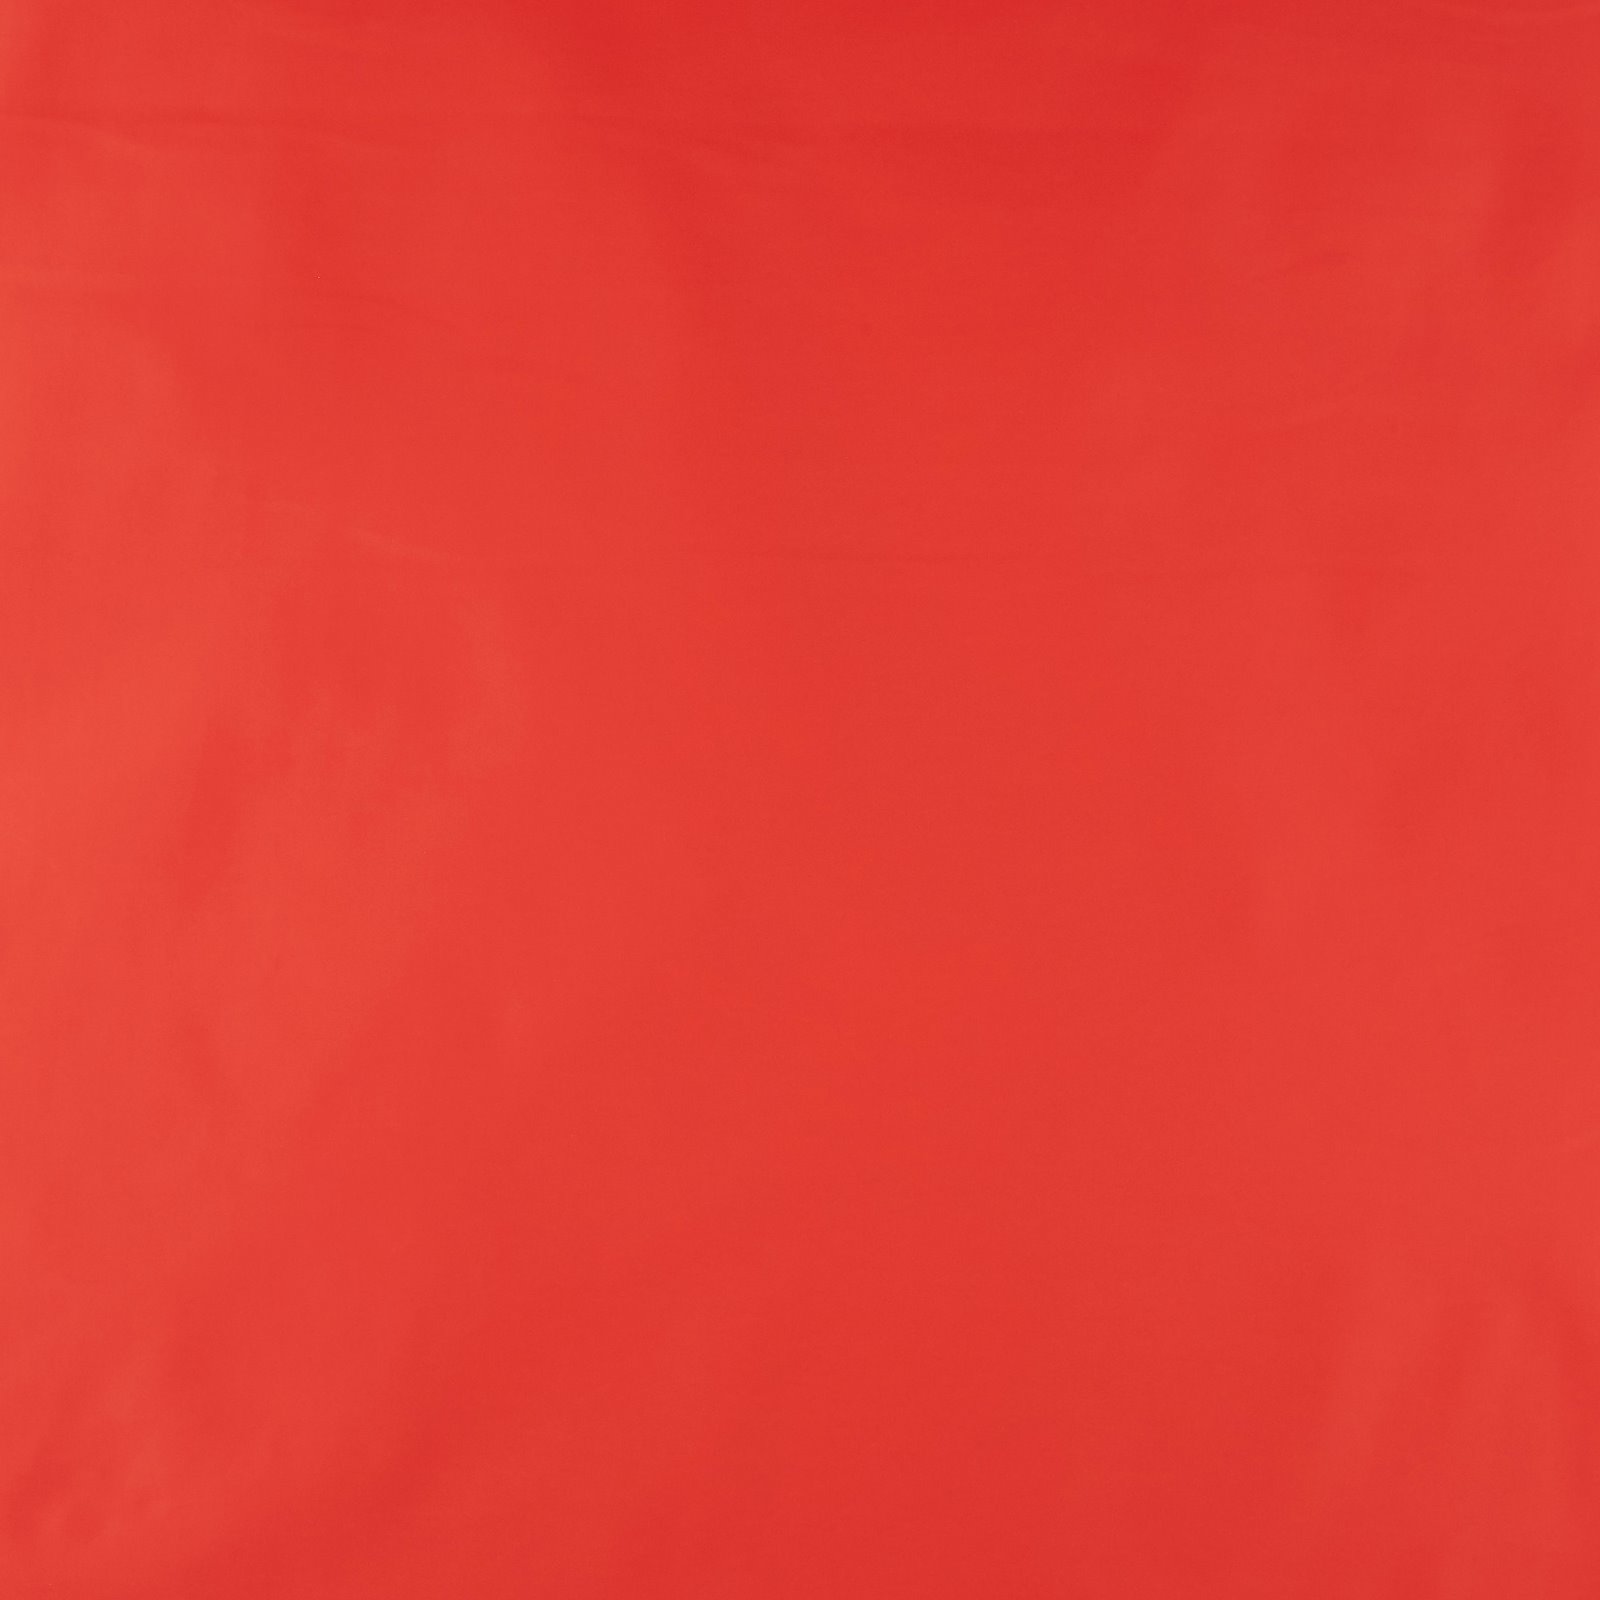 Regntøystoff klar rød 650773_pack_solid